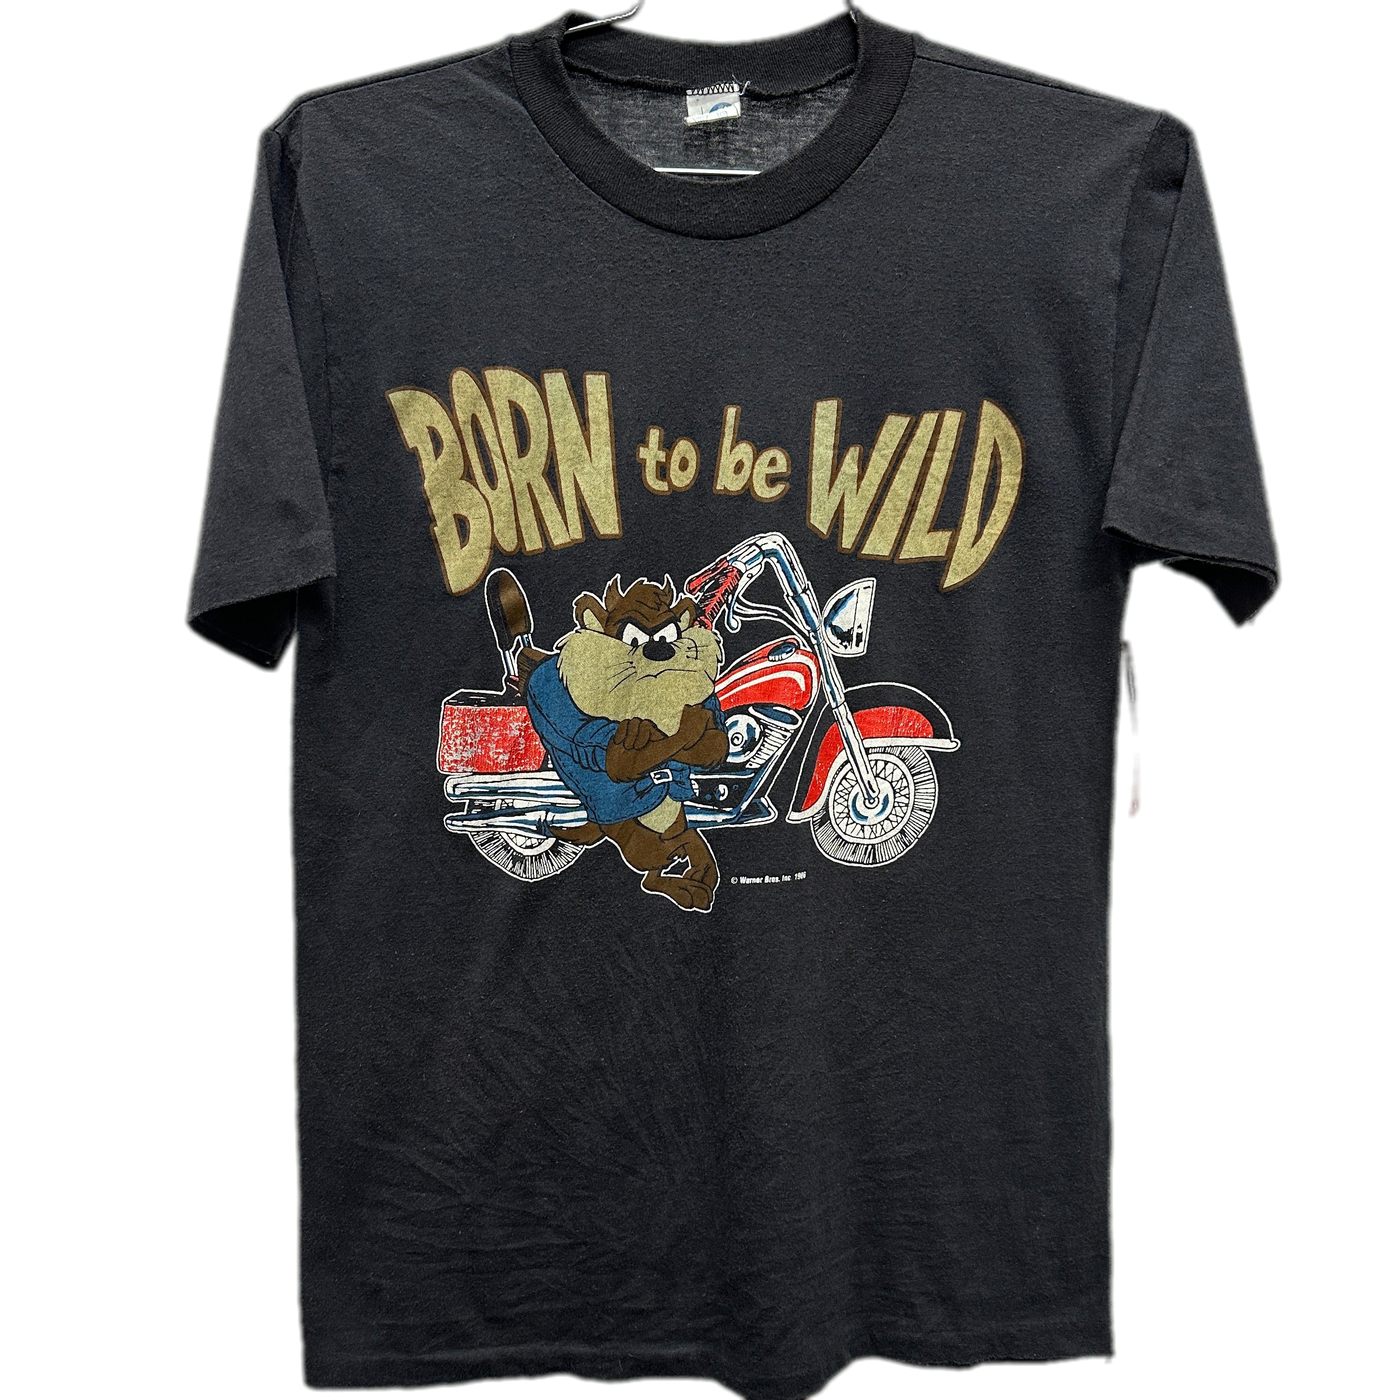 '86 Looney Tunes Taz "Born To Be Wild" Black Cartoon T-shirt sz L